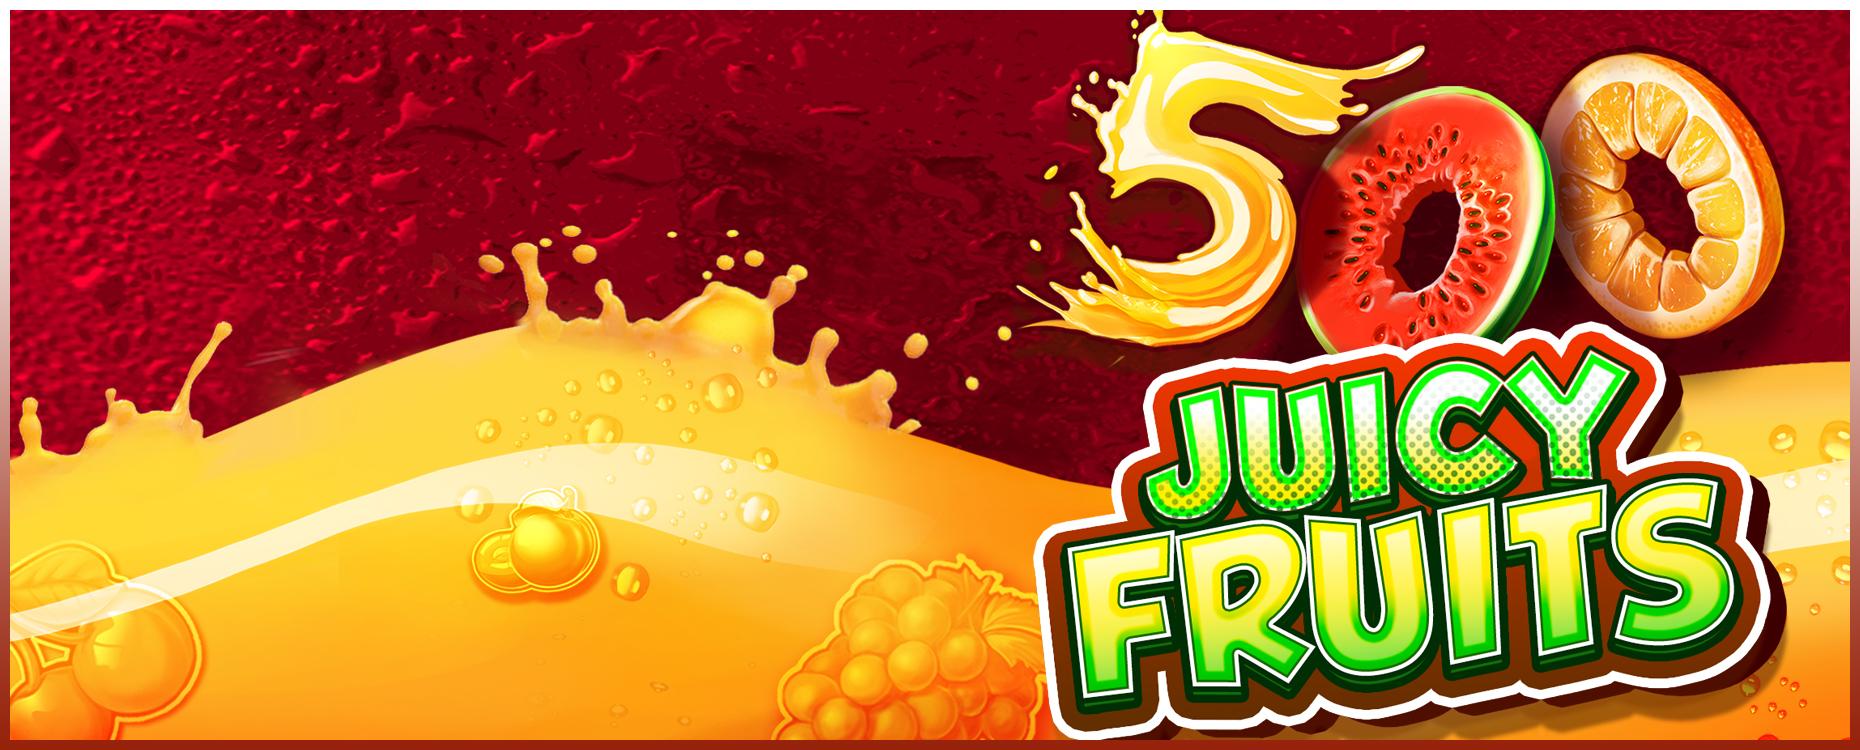 500 Juicy Fruits | Промо-материалы | Игровой автомат онлайн